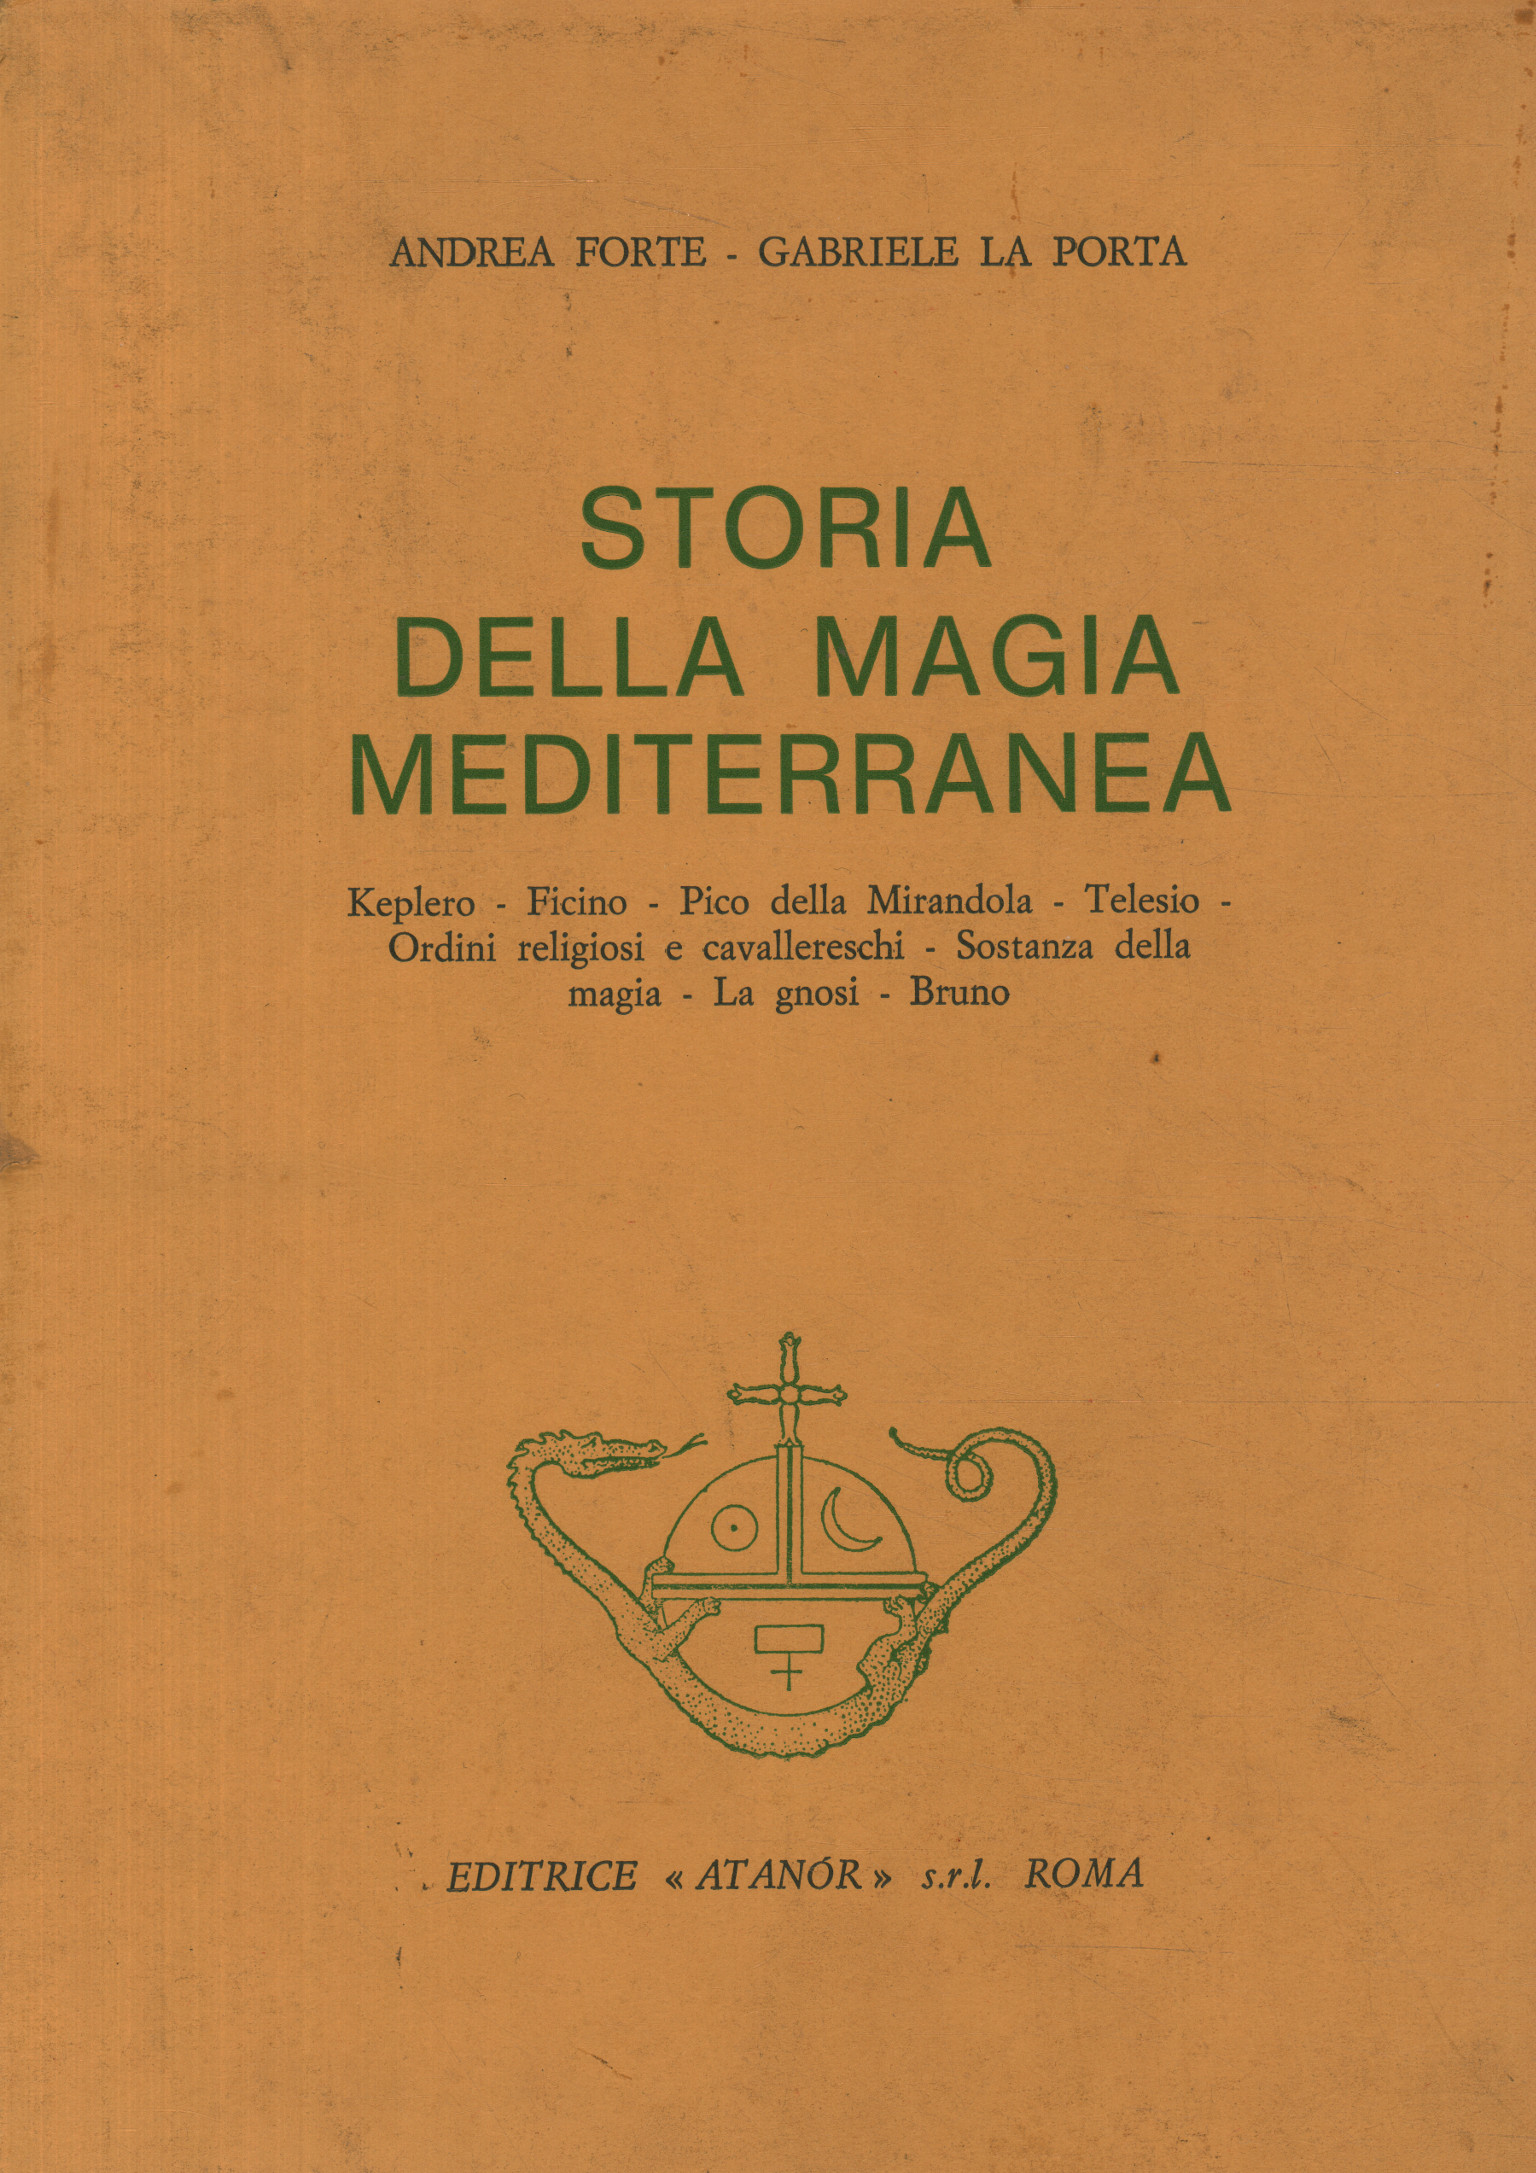 History of Mediterranean magic